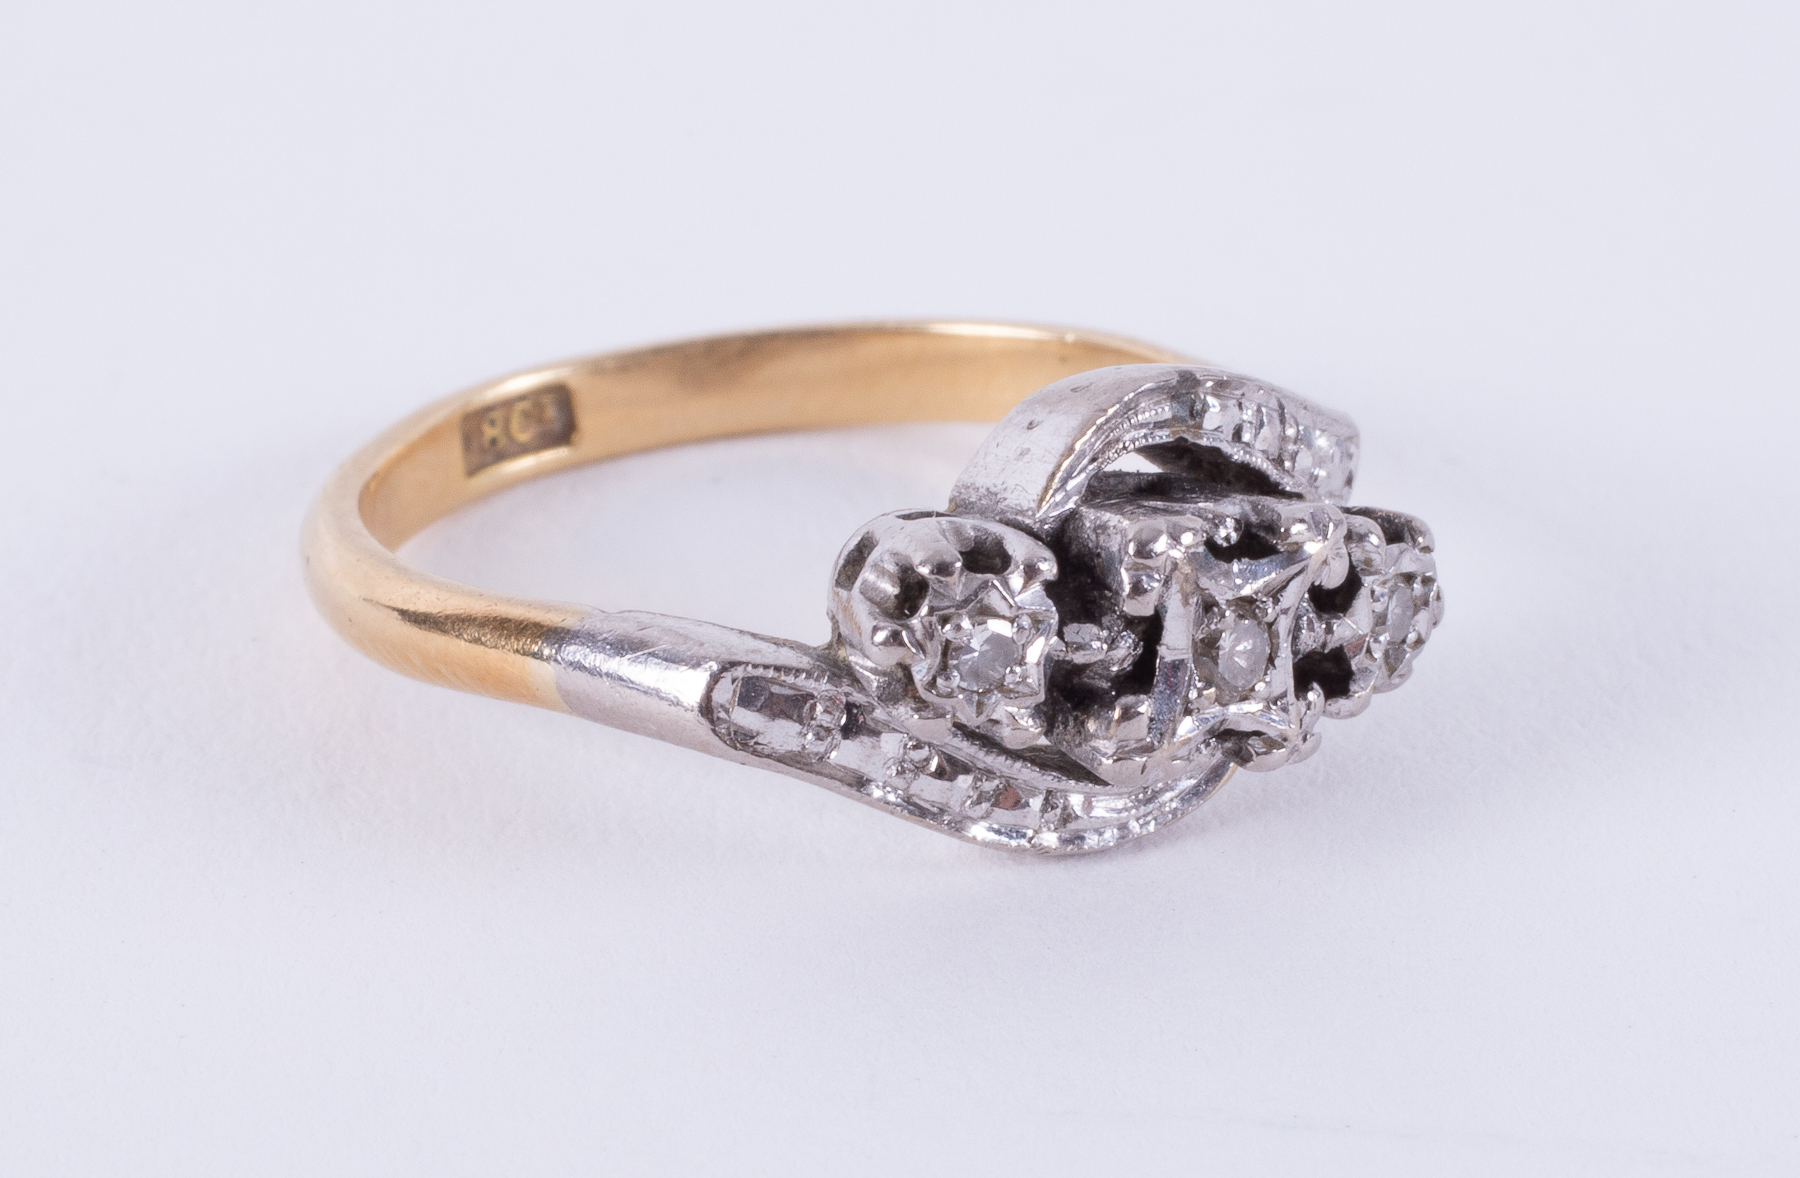 An 18ct yellow gold & platinum twist design ring set with three small round cut diamonds